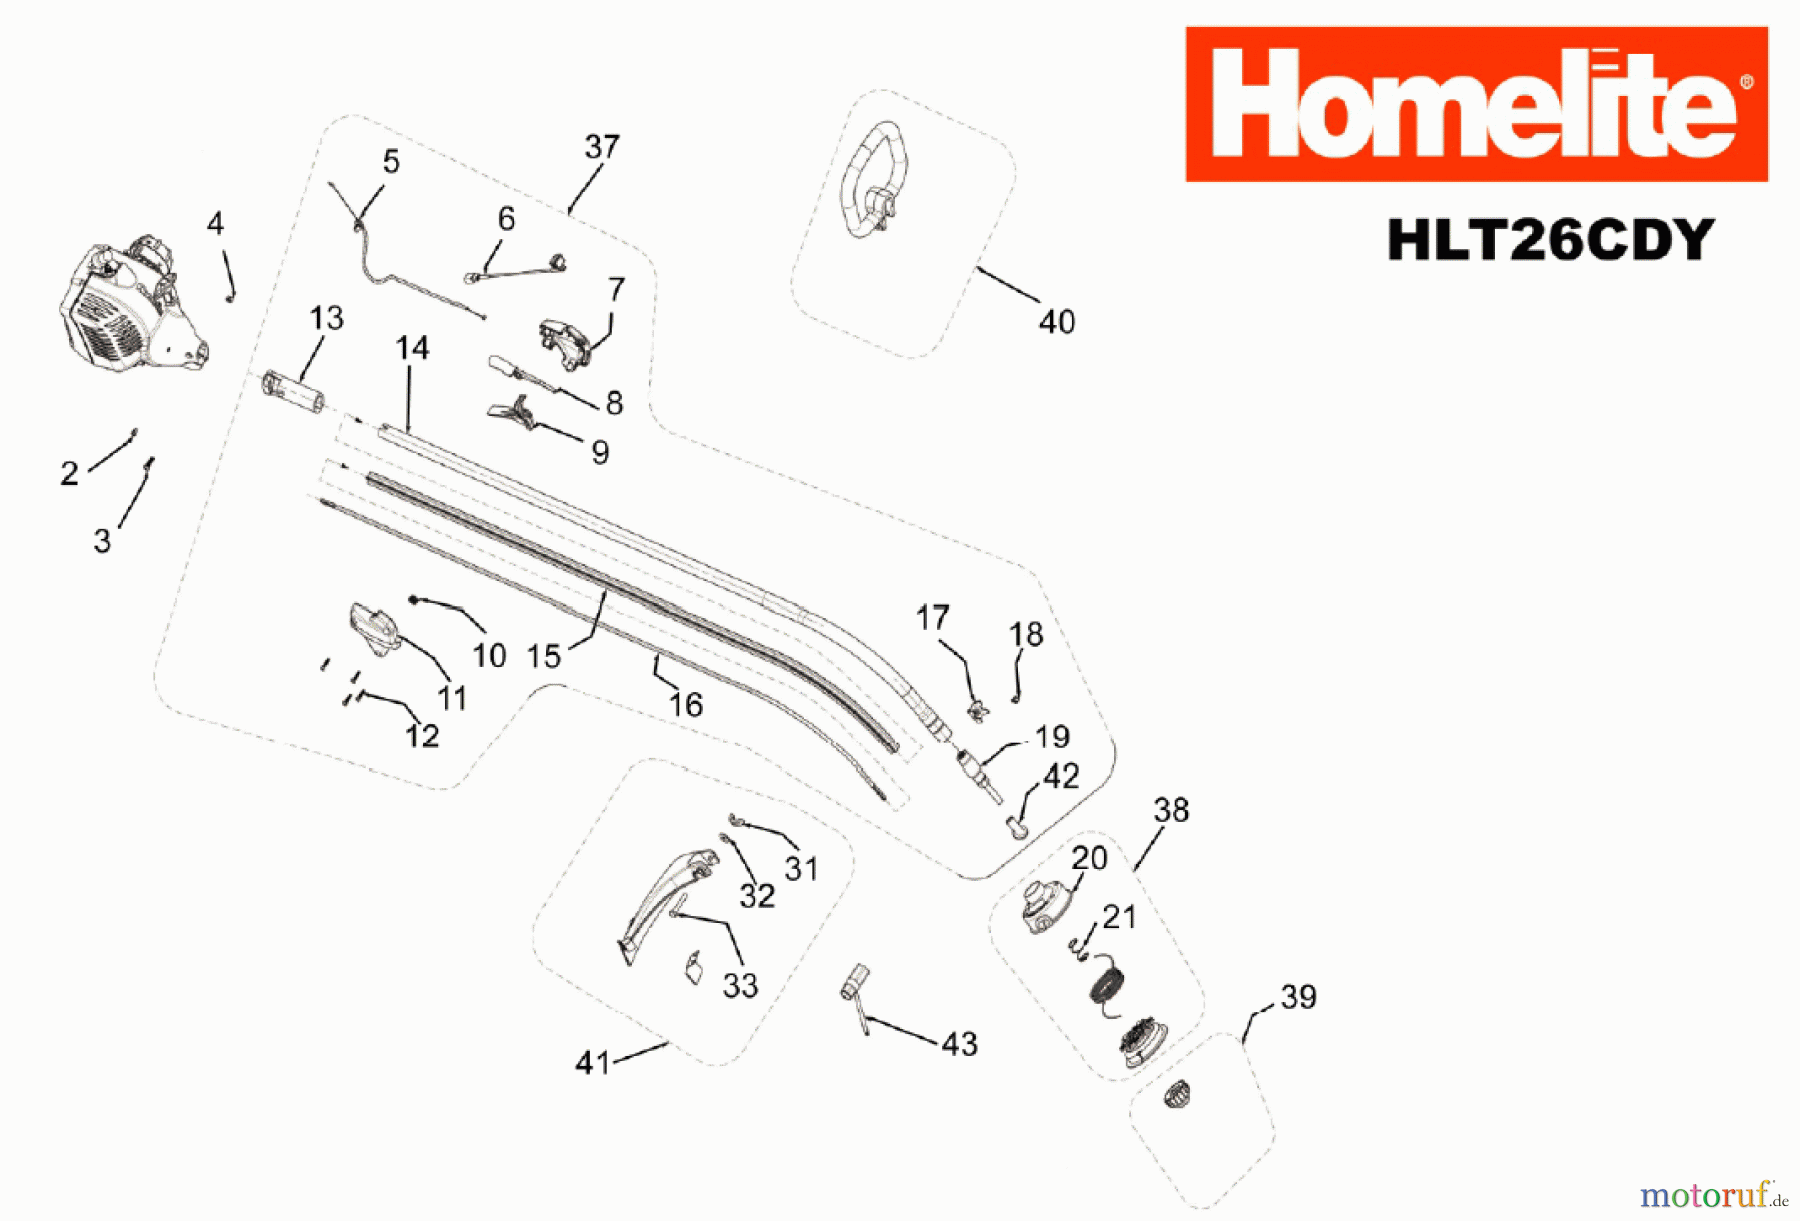  Homelite Trimmer Benzin HLT26CDY Seite 1